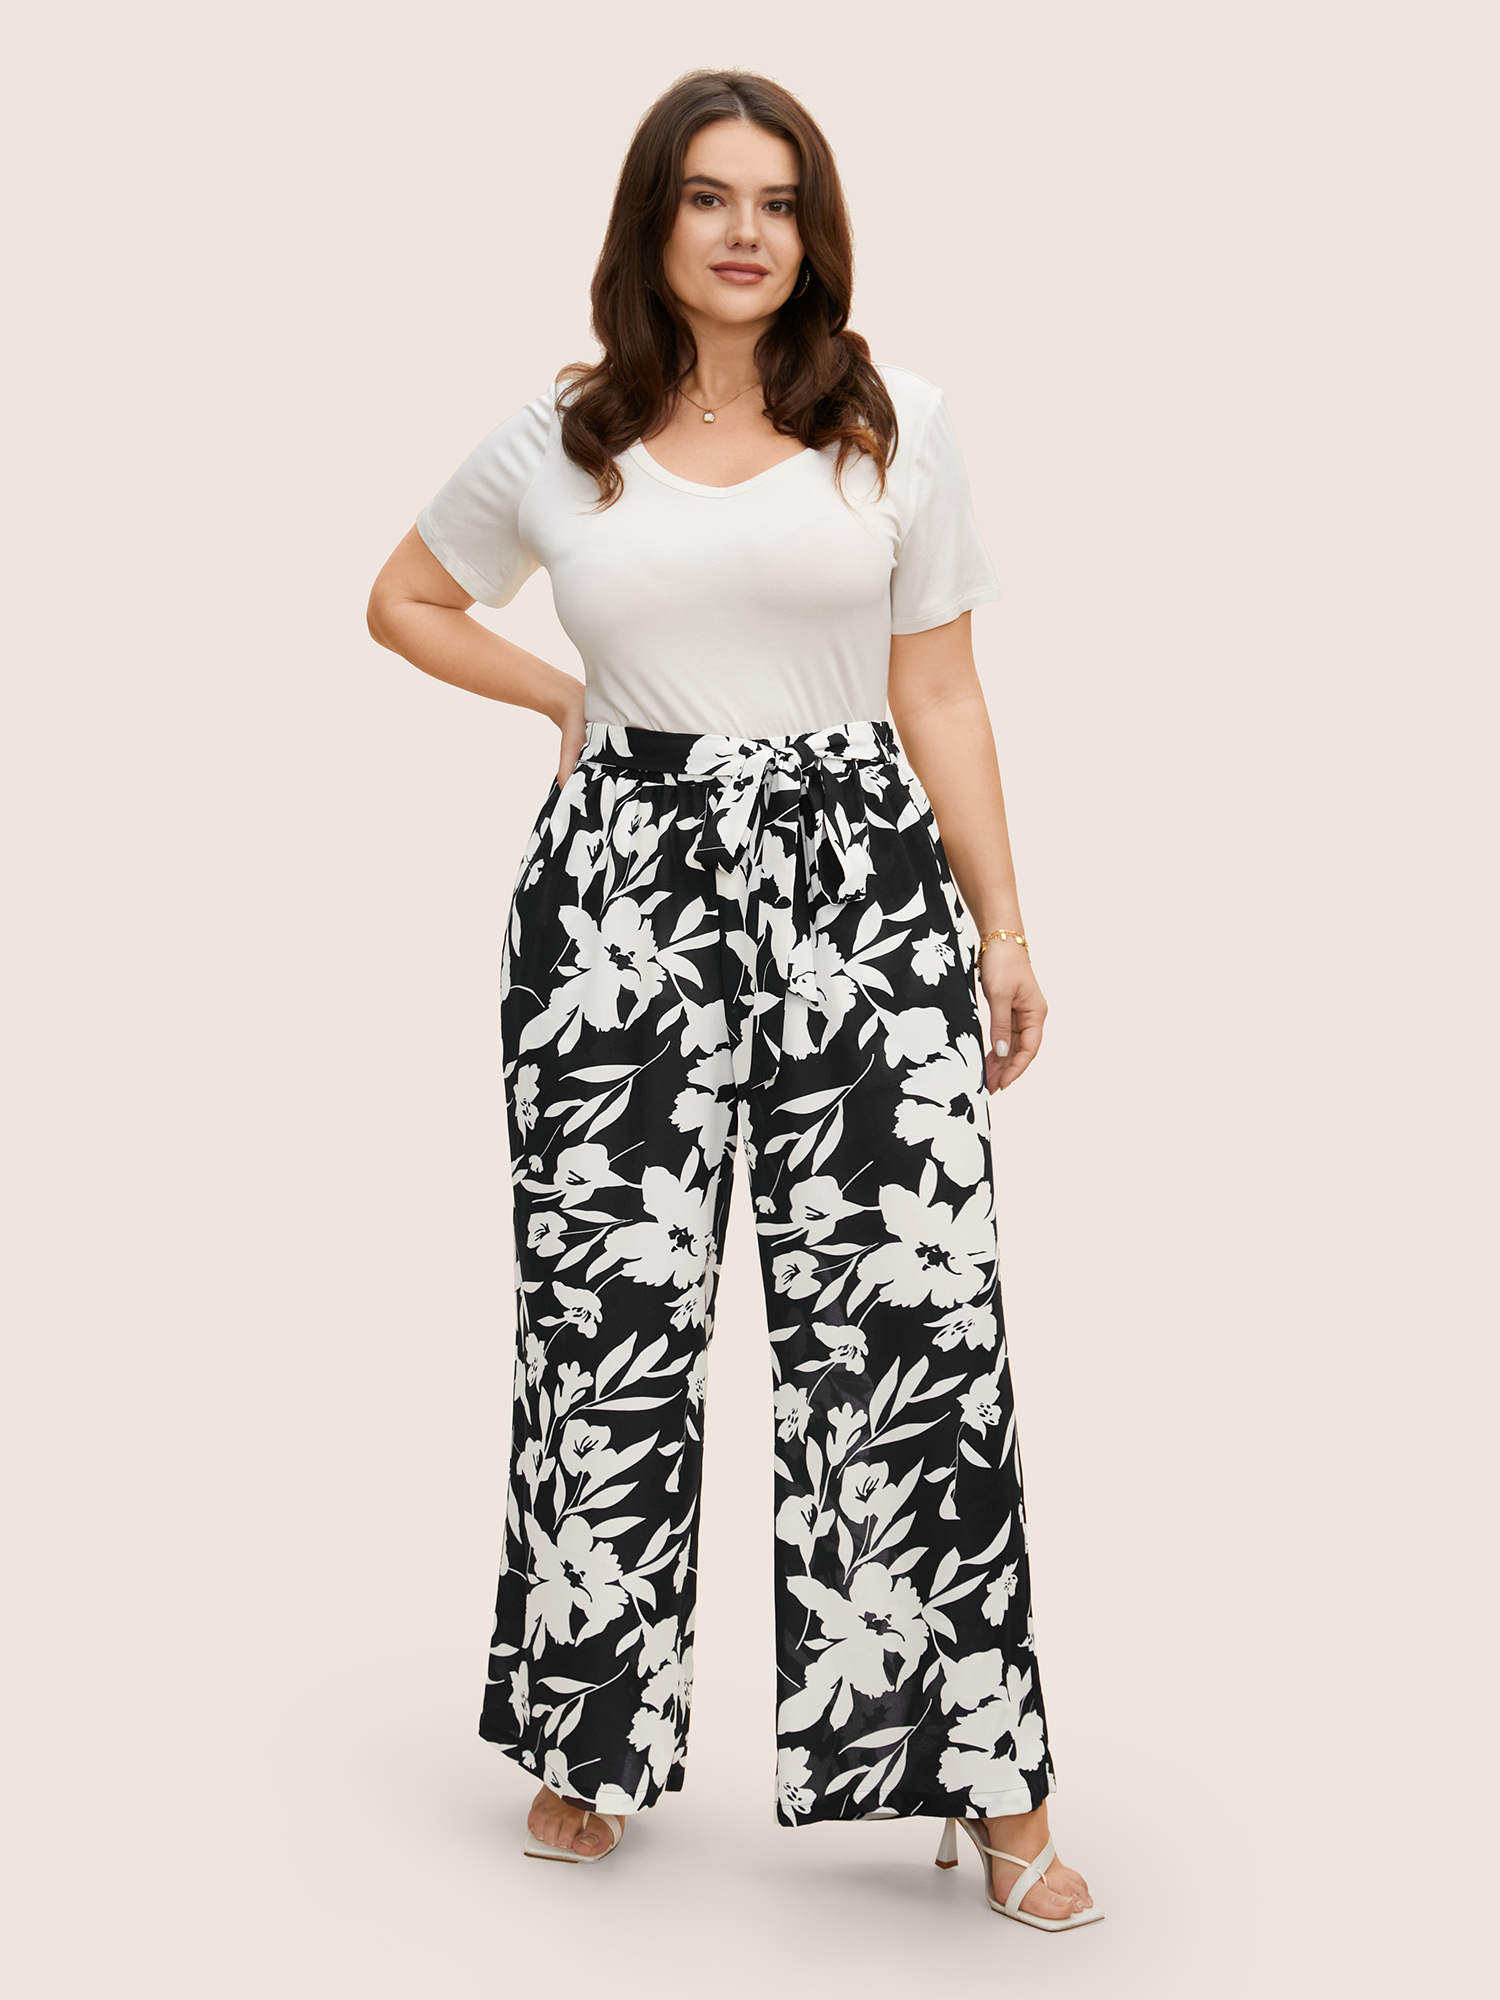 

Plus Size Silhouette Floral Print Ties Side Seam Pocket Pants Women Black Elegant Wide Leg High Rise Everyday Pants BloomChic